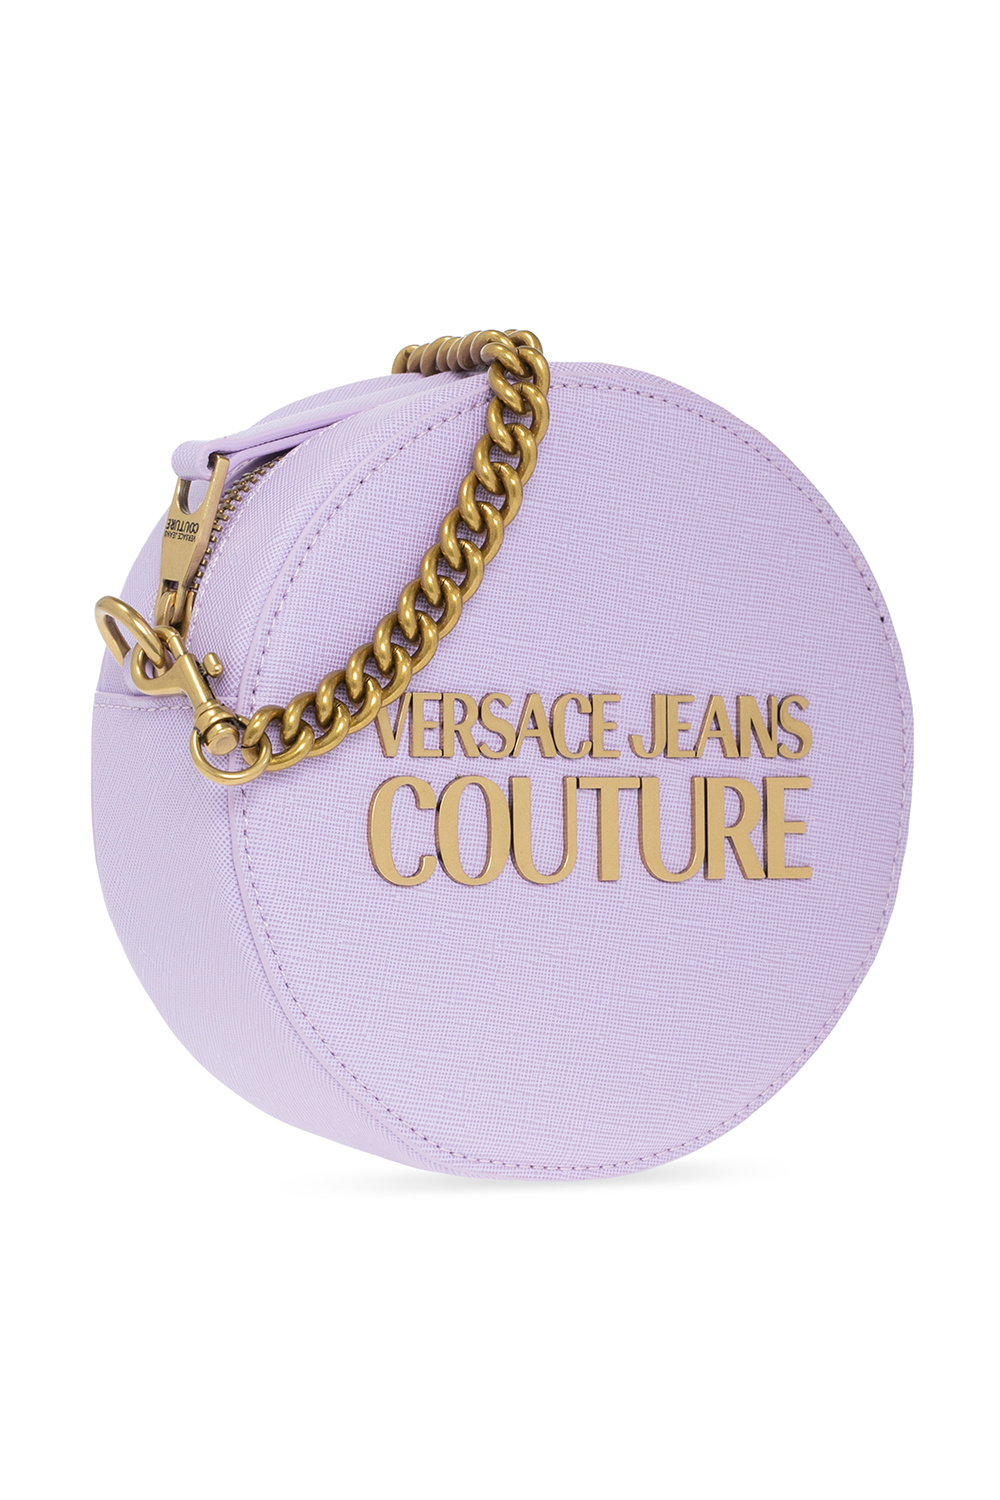 Versace Jeans Couture Purple Brand P011 straight-leg jeans